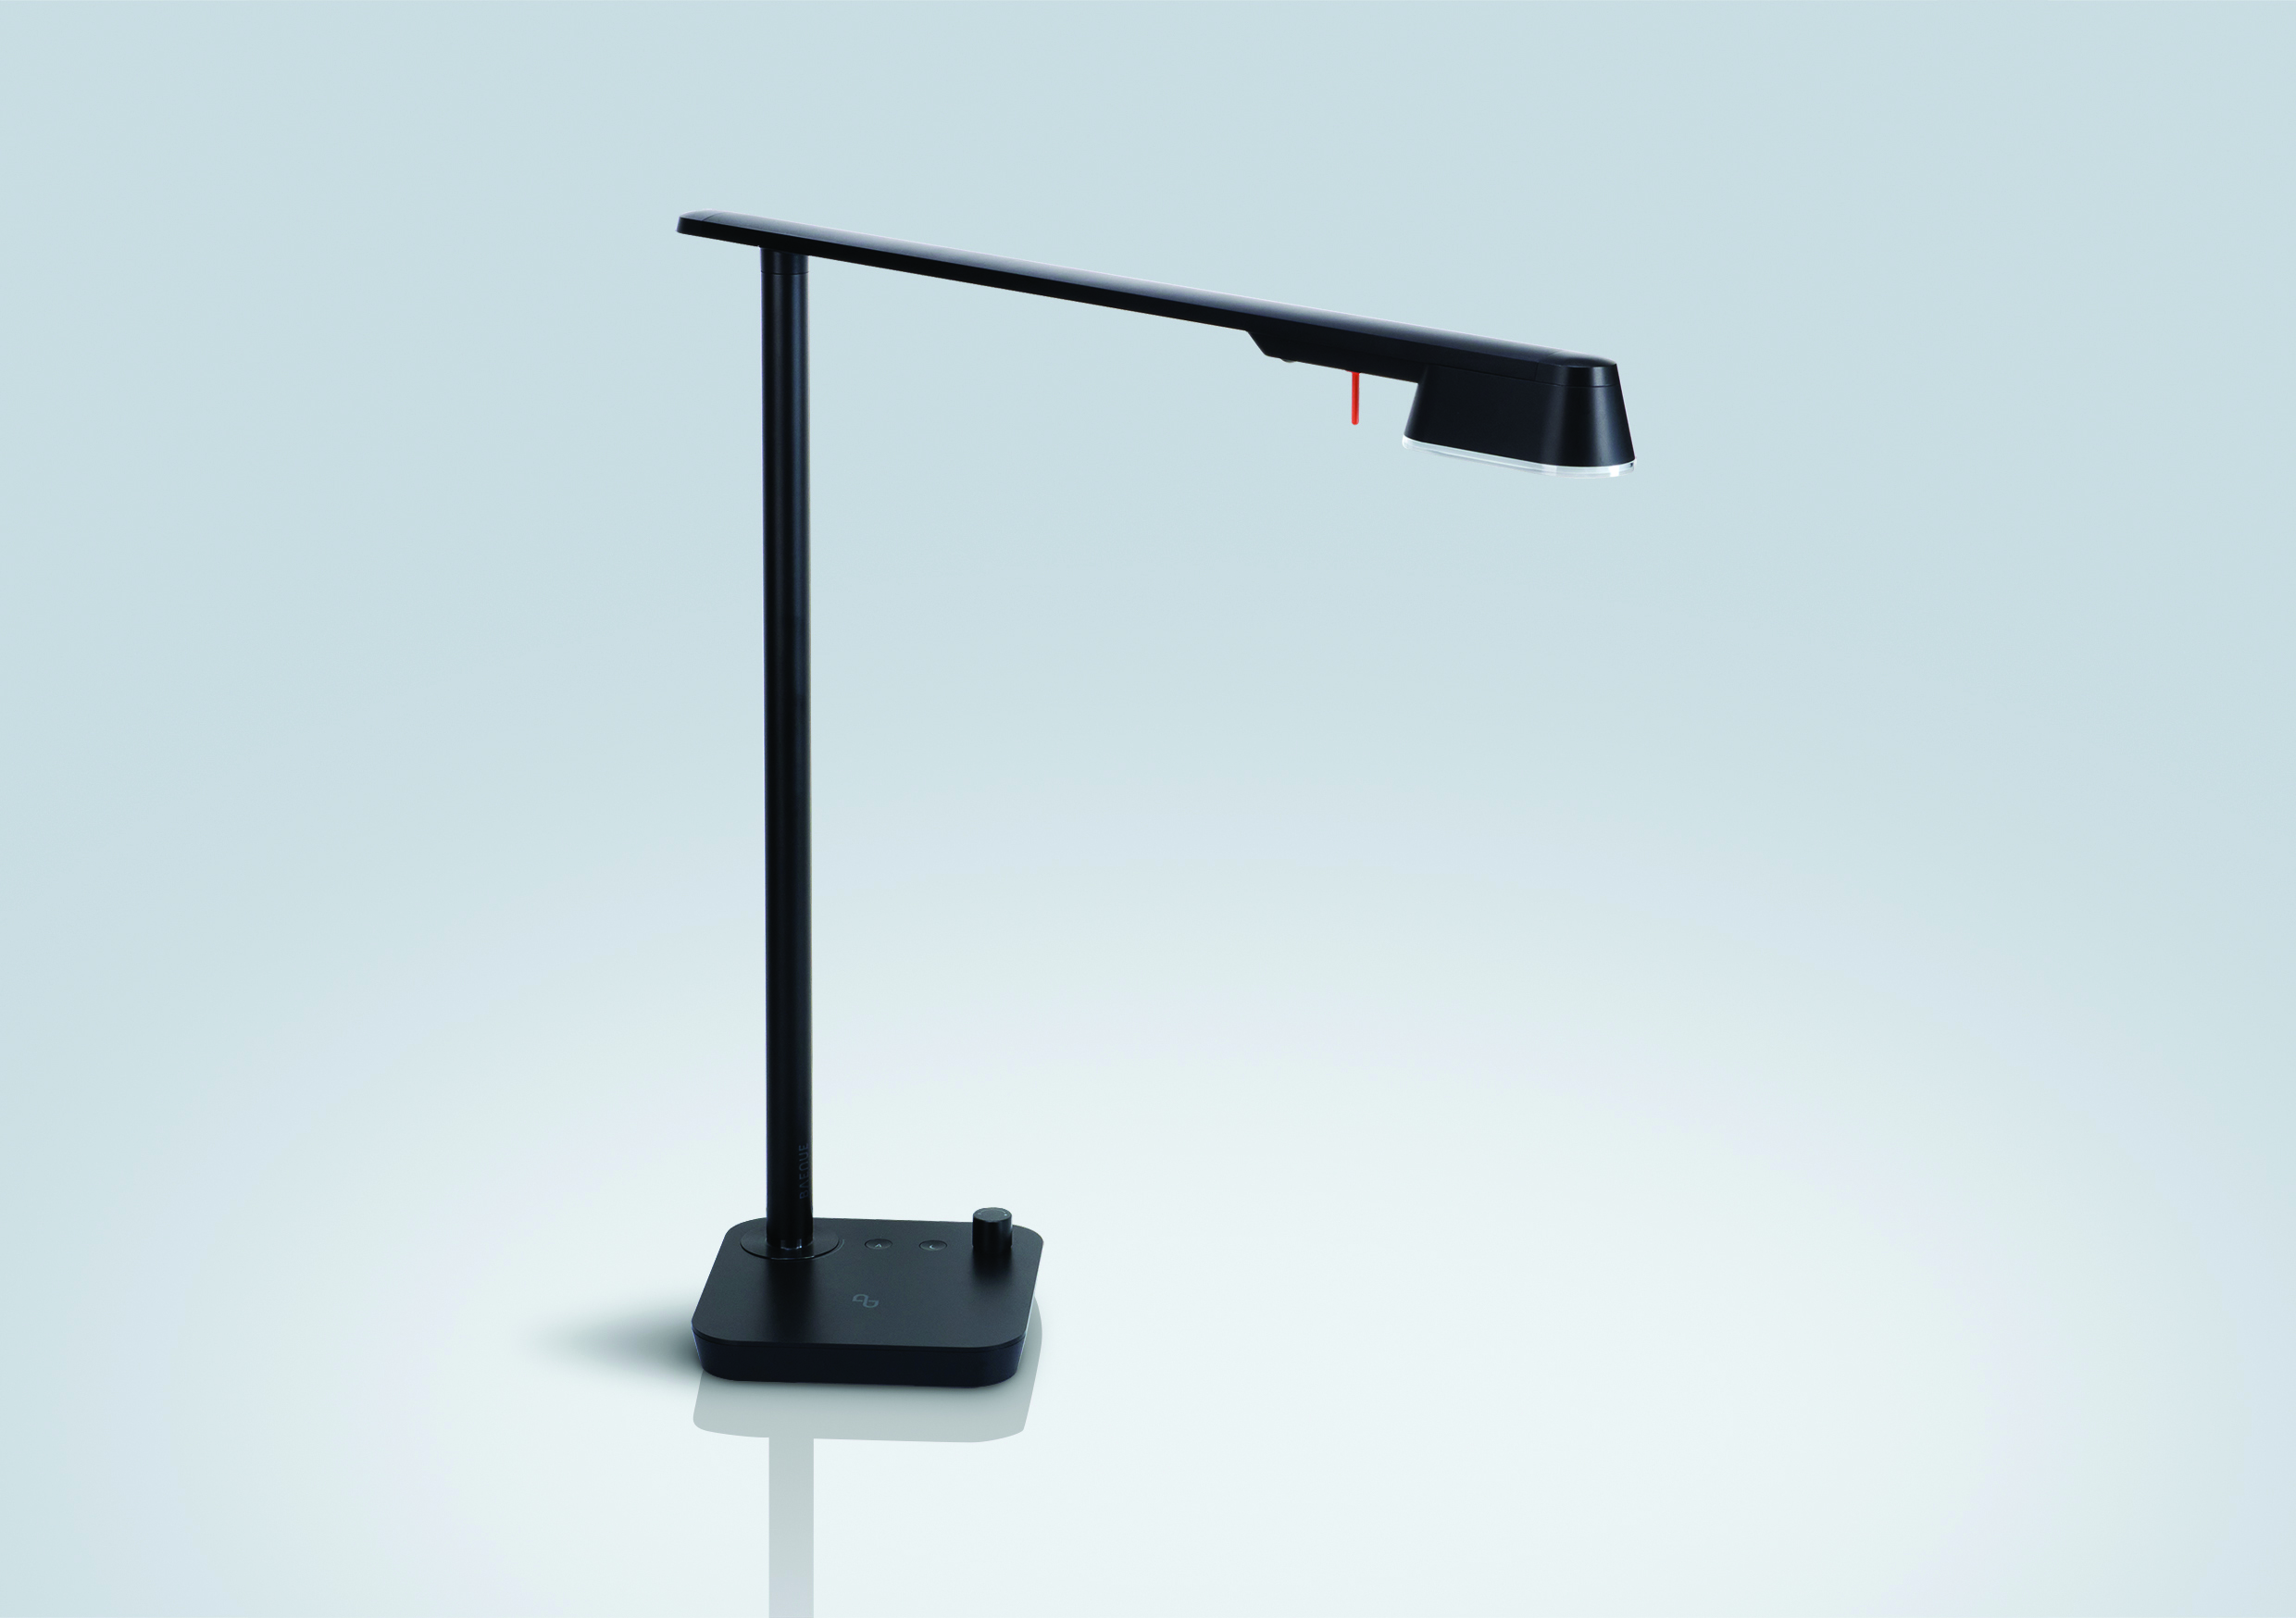 BAENUE - The New Lamp, Baelux Co., Ltd.